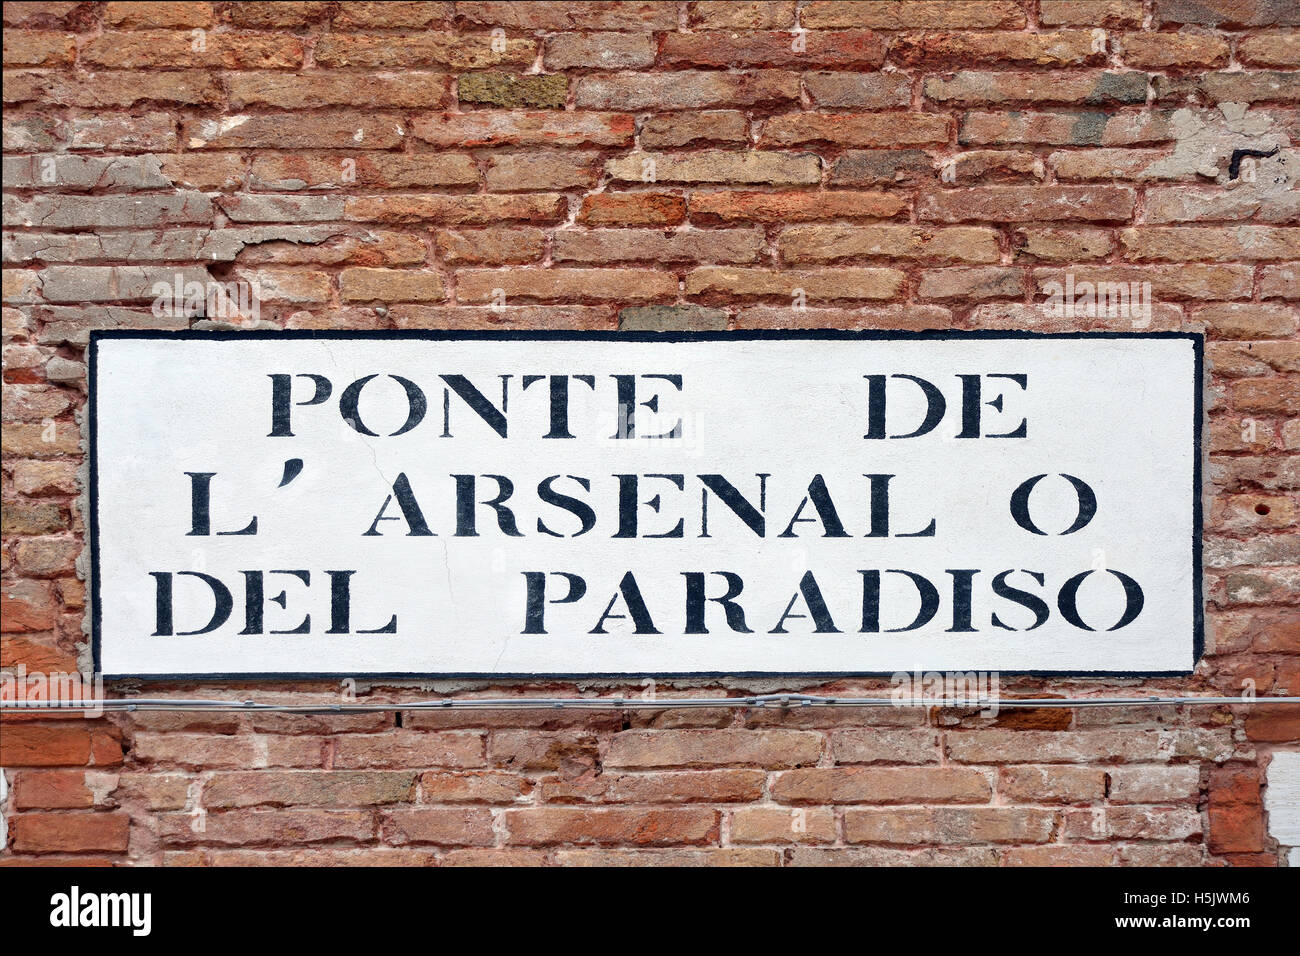 Street sign from the historic Venetian Arsenal in Castello district of Venice in Italy - Ponte de l’Arsenale del Paradiso. Stock Photo